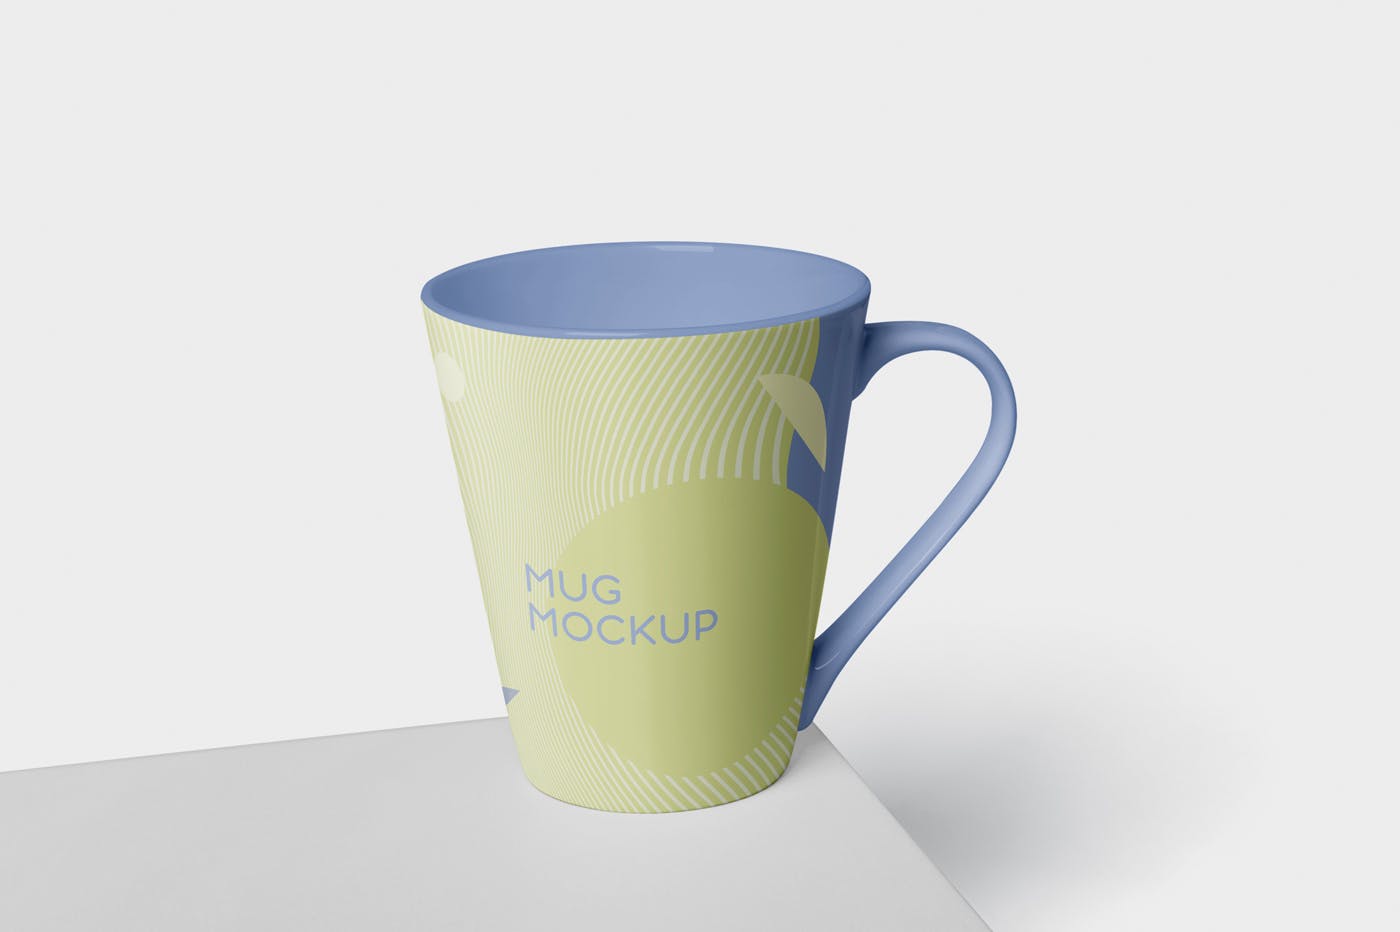 锥形马克杯图案设计16设计网精选 Mug Mockup – Cone Shaped插图(2)